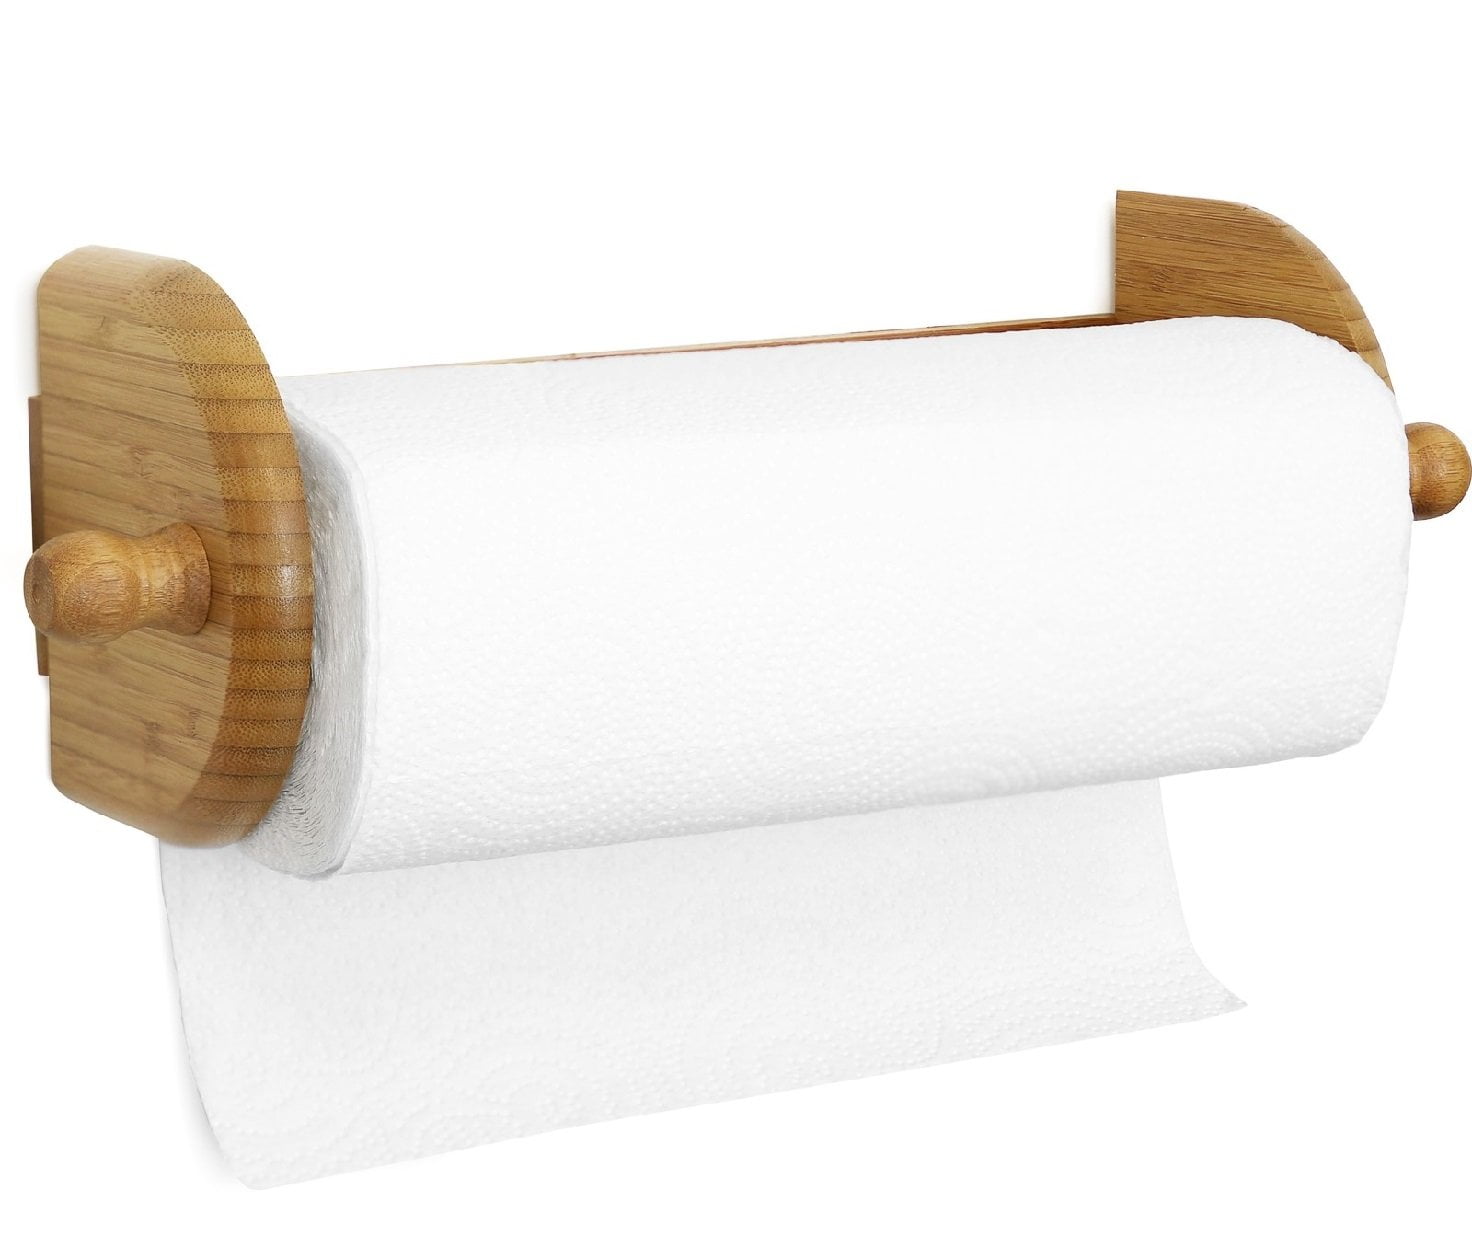 Smart Design Wooden Paper Towel Holder - Fits Standard Size Rolls - Bamboo, Brown